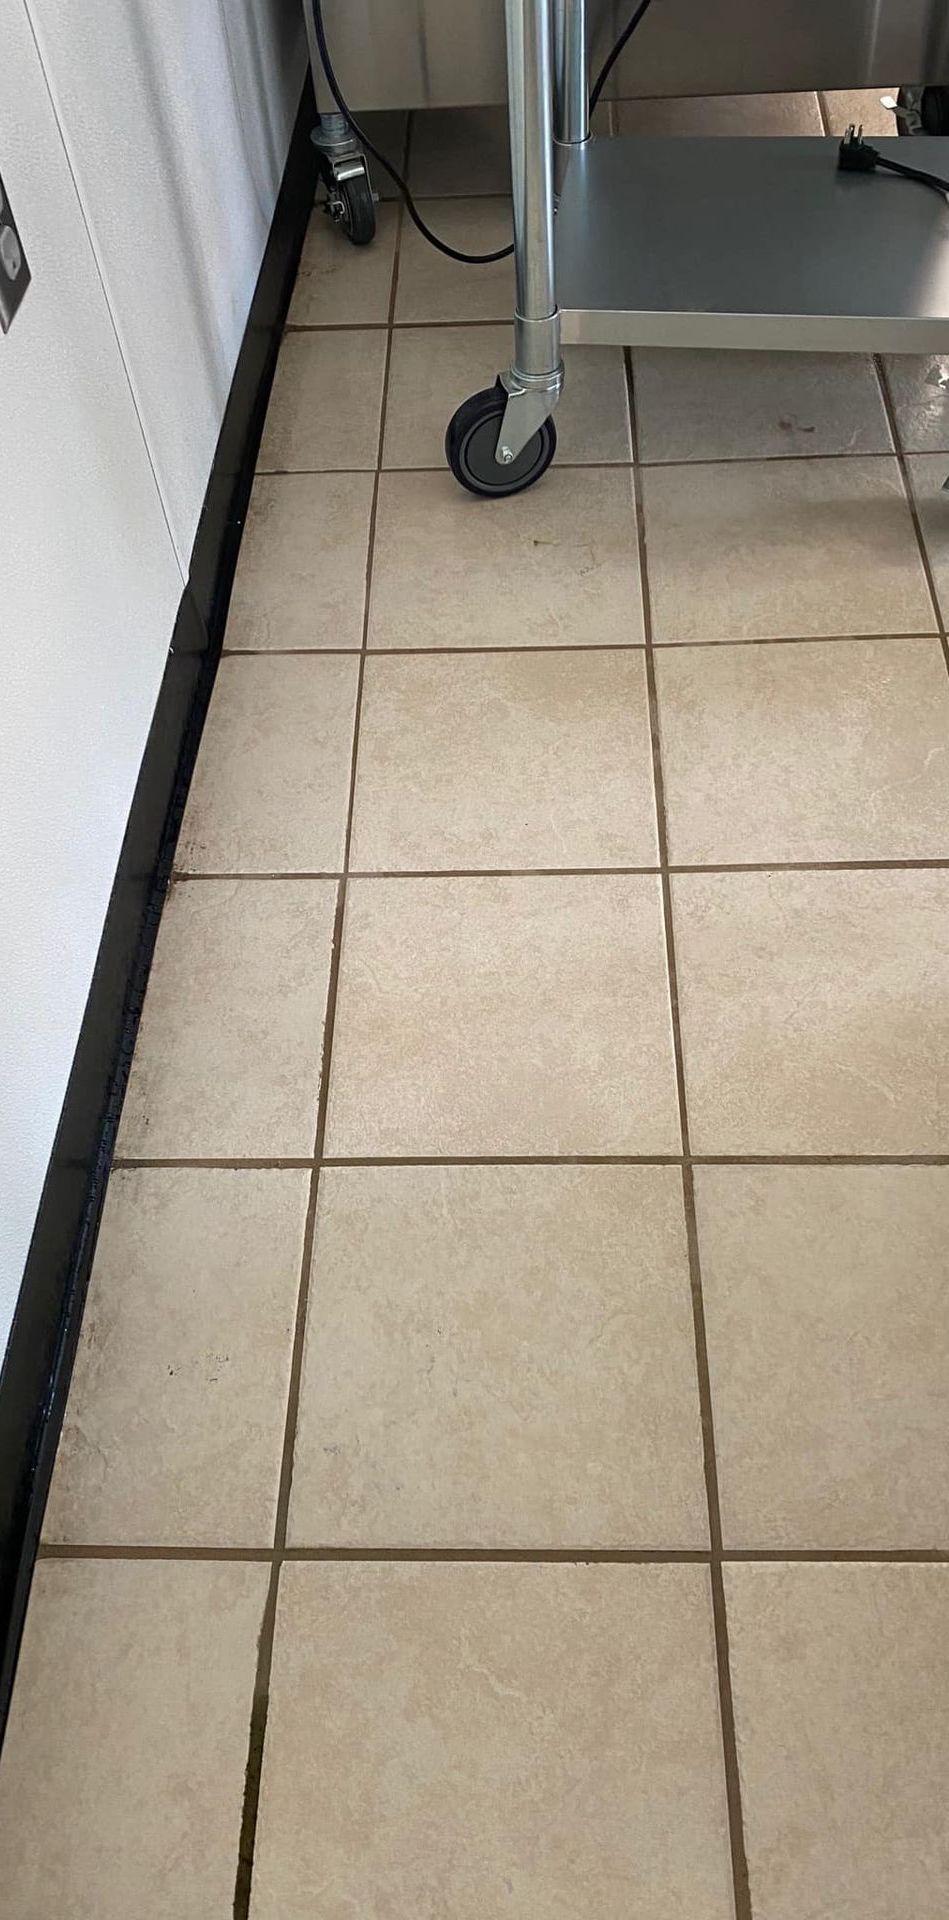 Clean Tile Floor